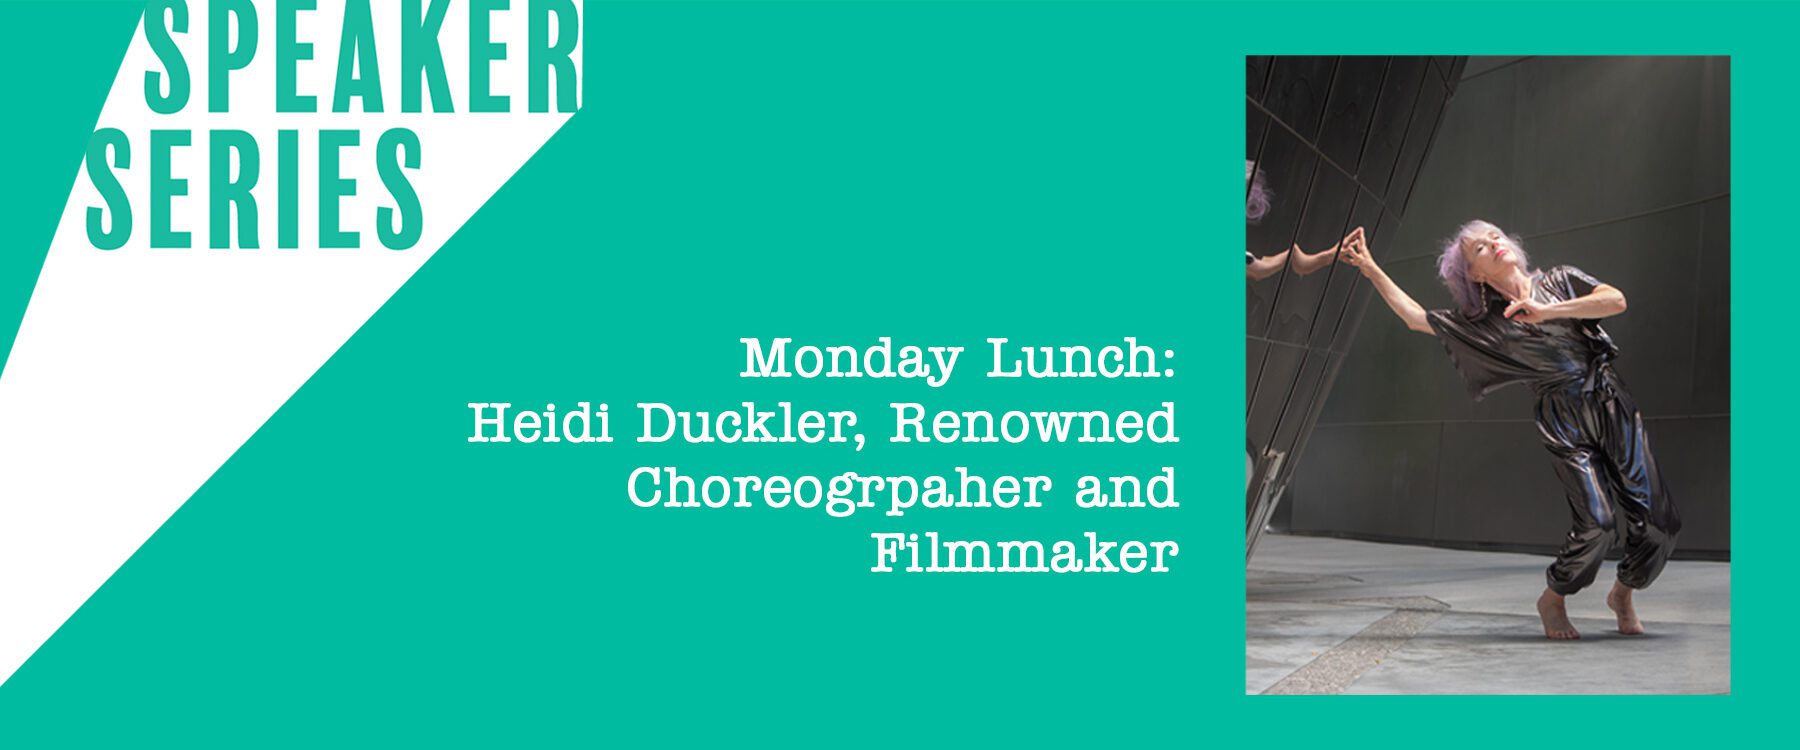 Speaker Series Monday Lunch: Heidi Duckler, Renowned Choreographer and Filmmaker